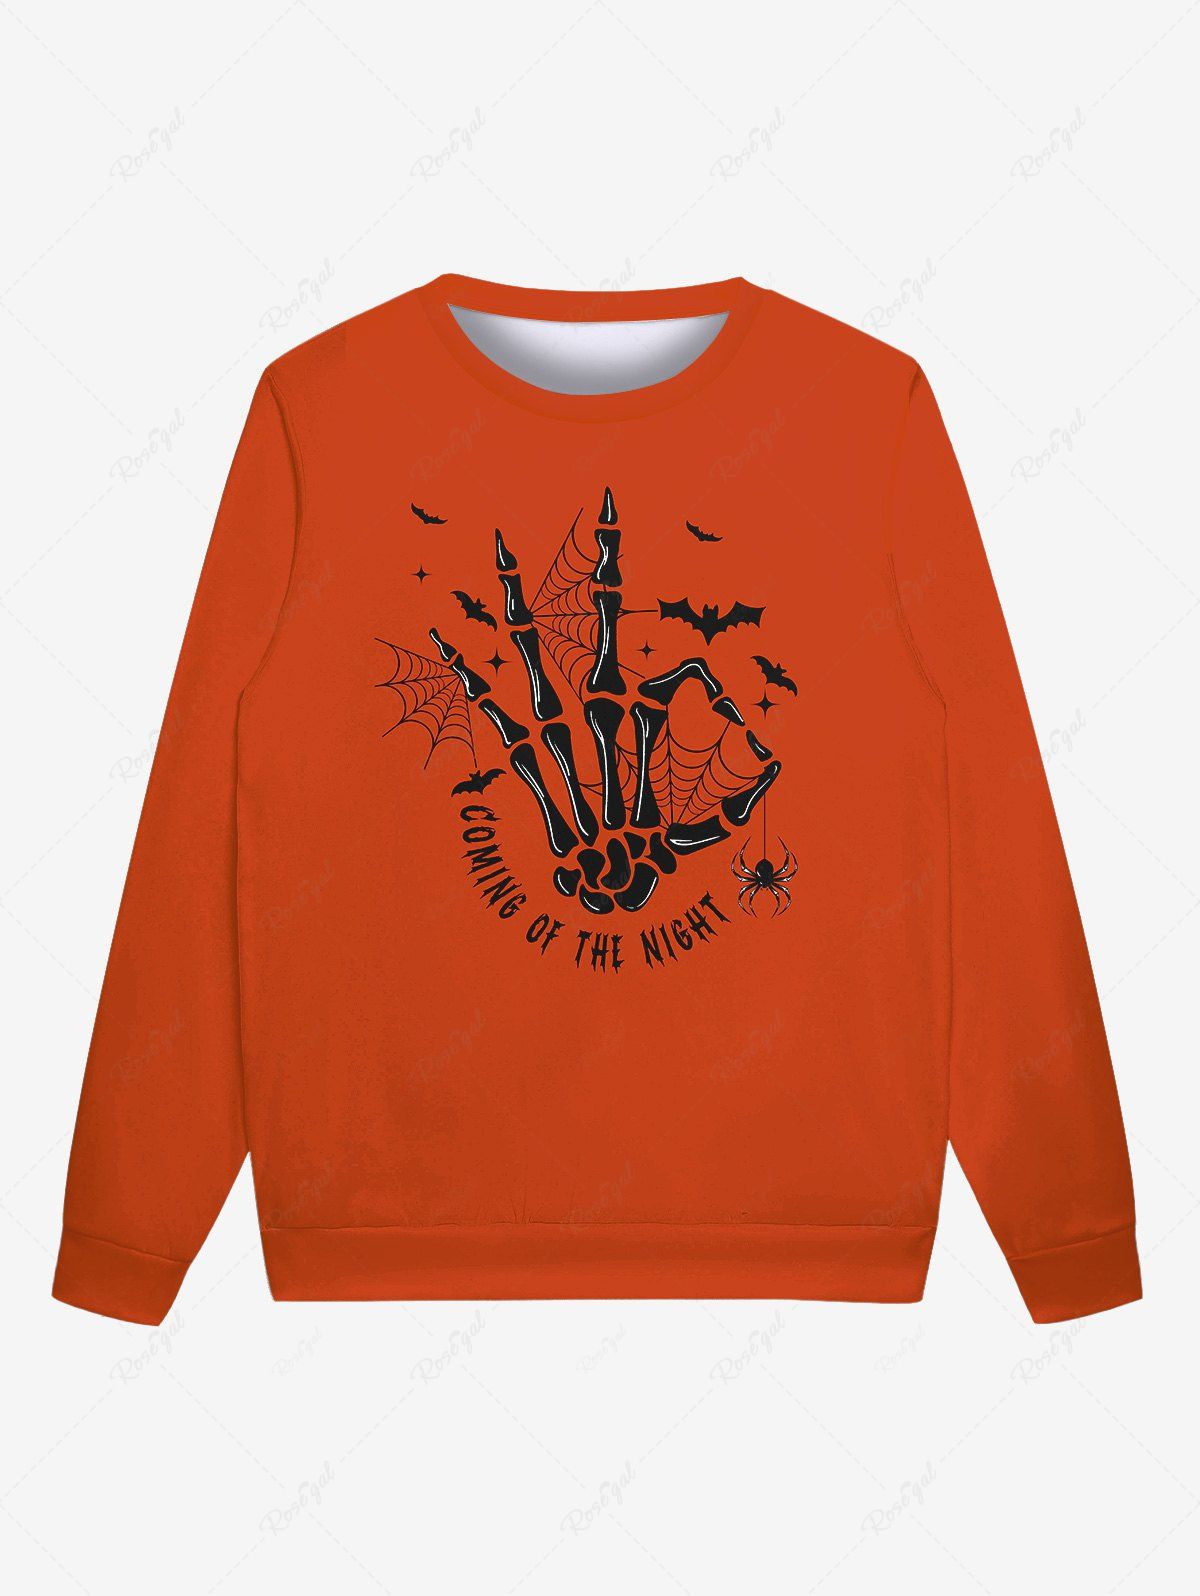 Gothic Skeleton Spider Web Bat Letters Print Halloween Sweatshirt For Men Rouge 6XL